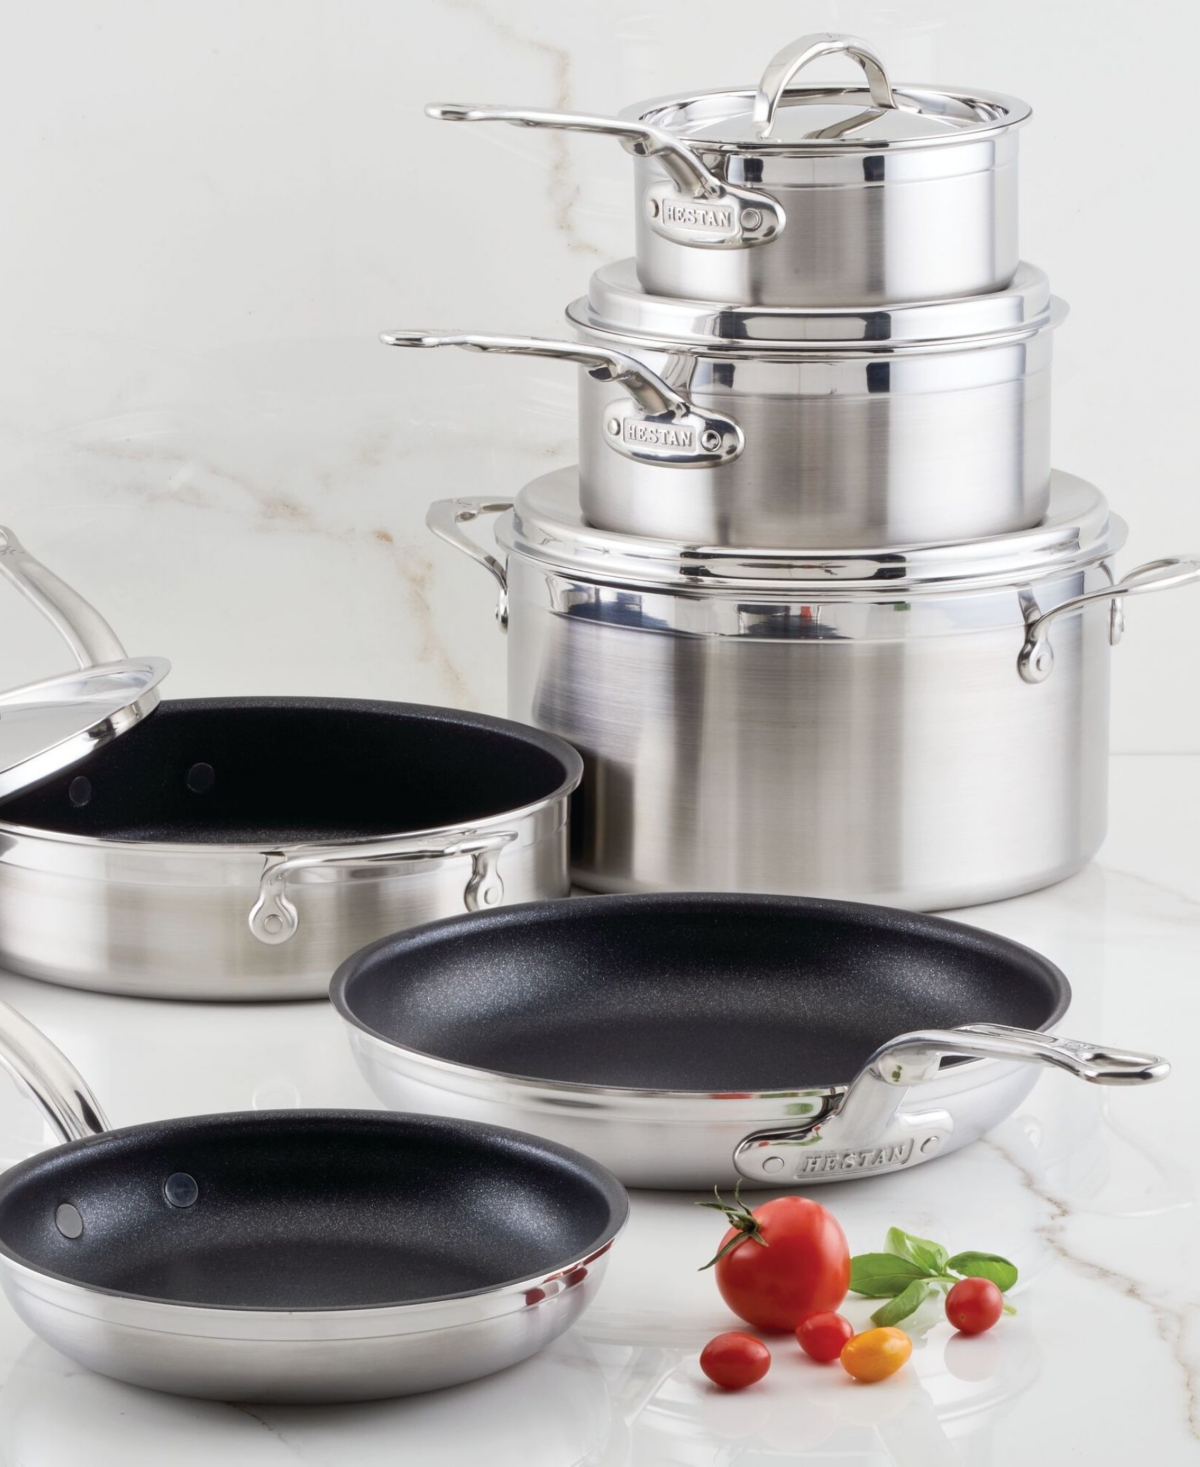 Shop Hestan Probond Clad Stainless Steel With Titum Nonstick 10-piece Cookware Set